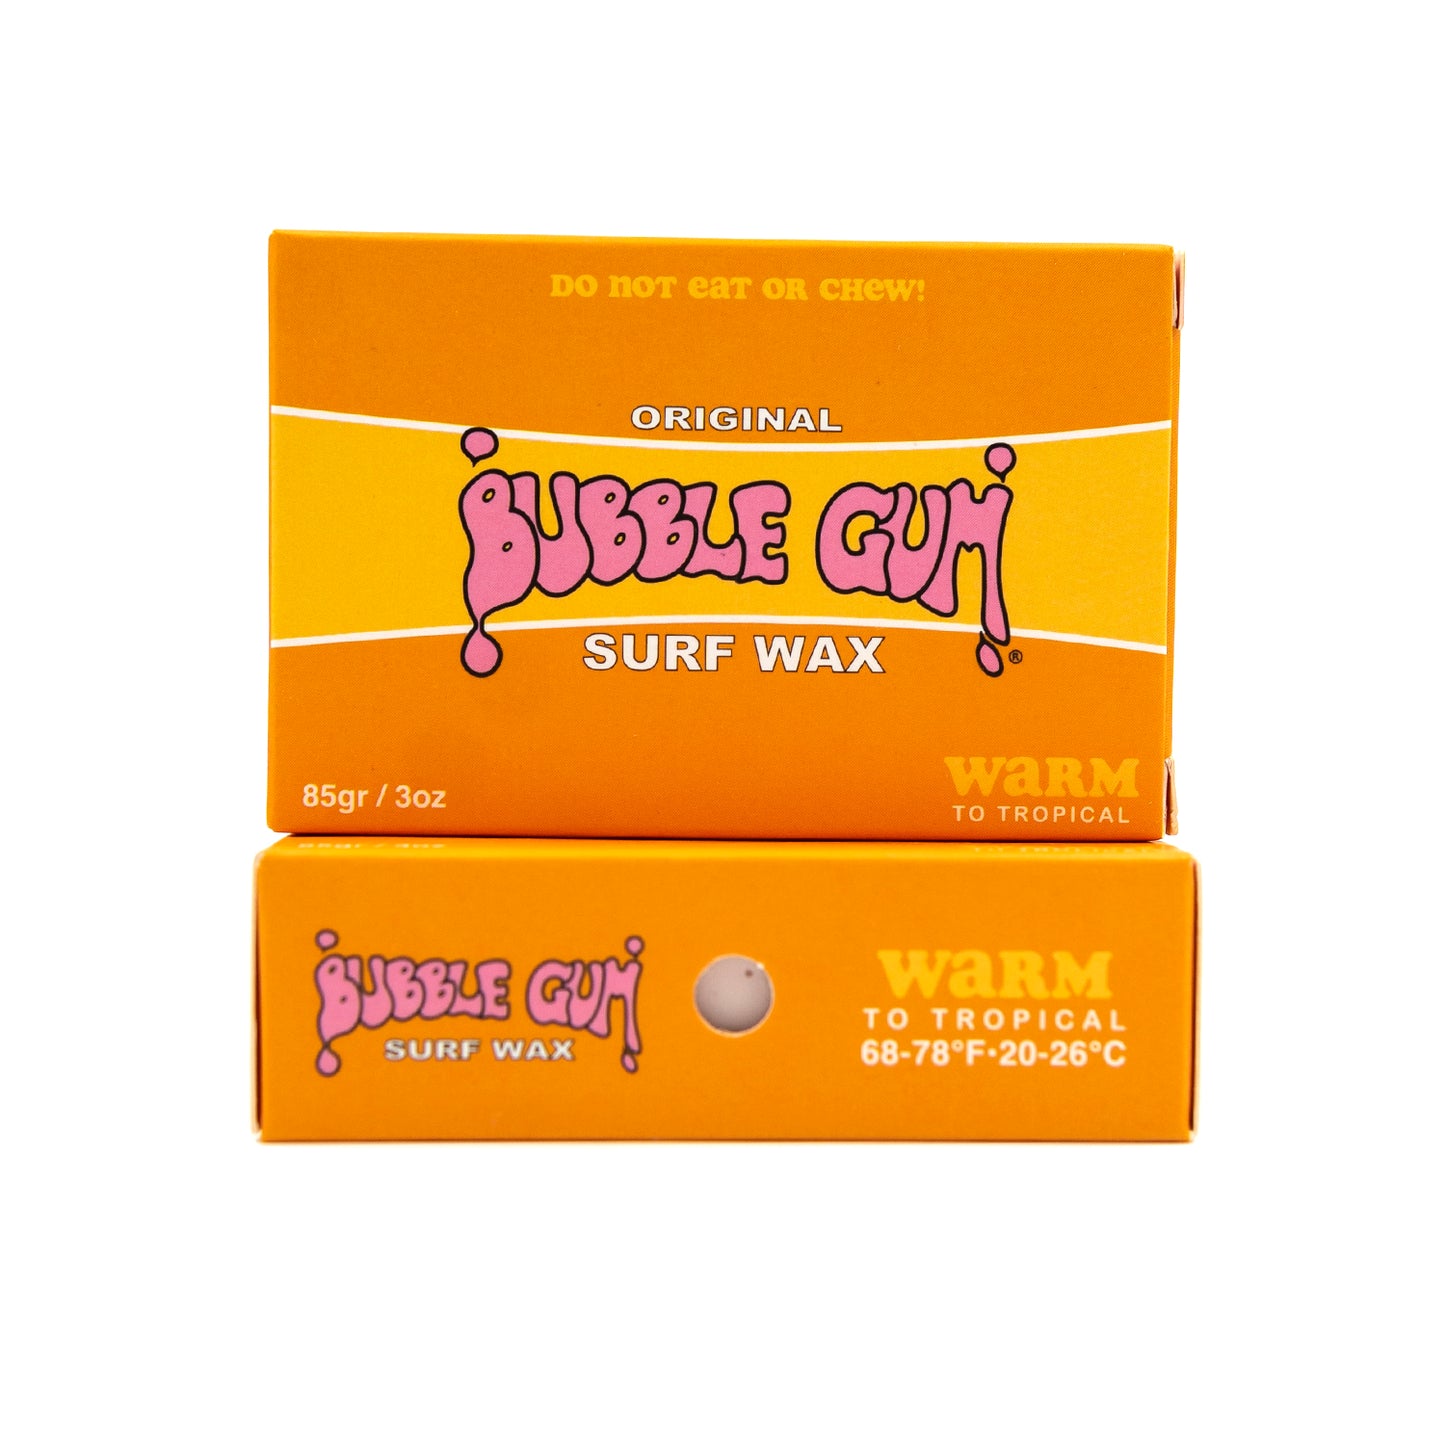 Bubble Gum "Original Formula" Surf Wax Box - Warm to Tropical - 68°- 78° - 6 Pack